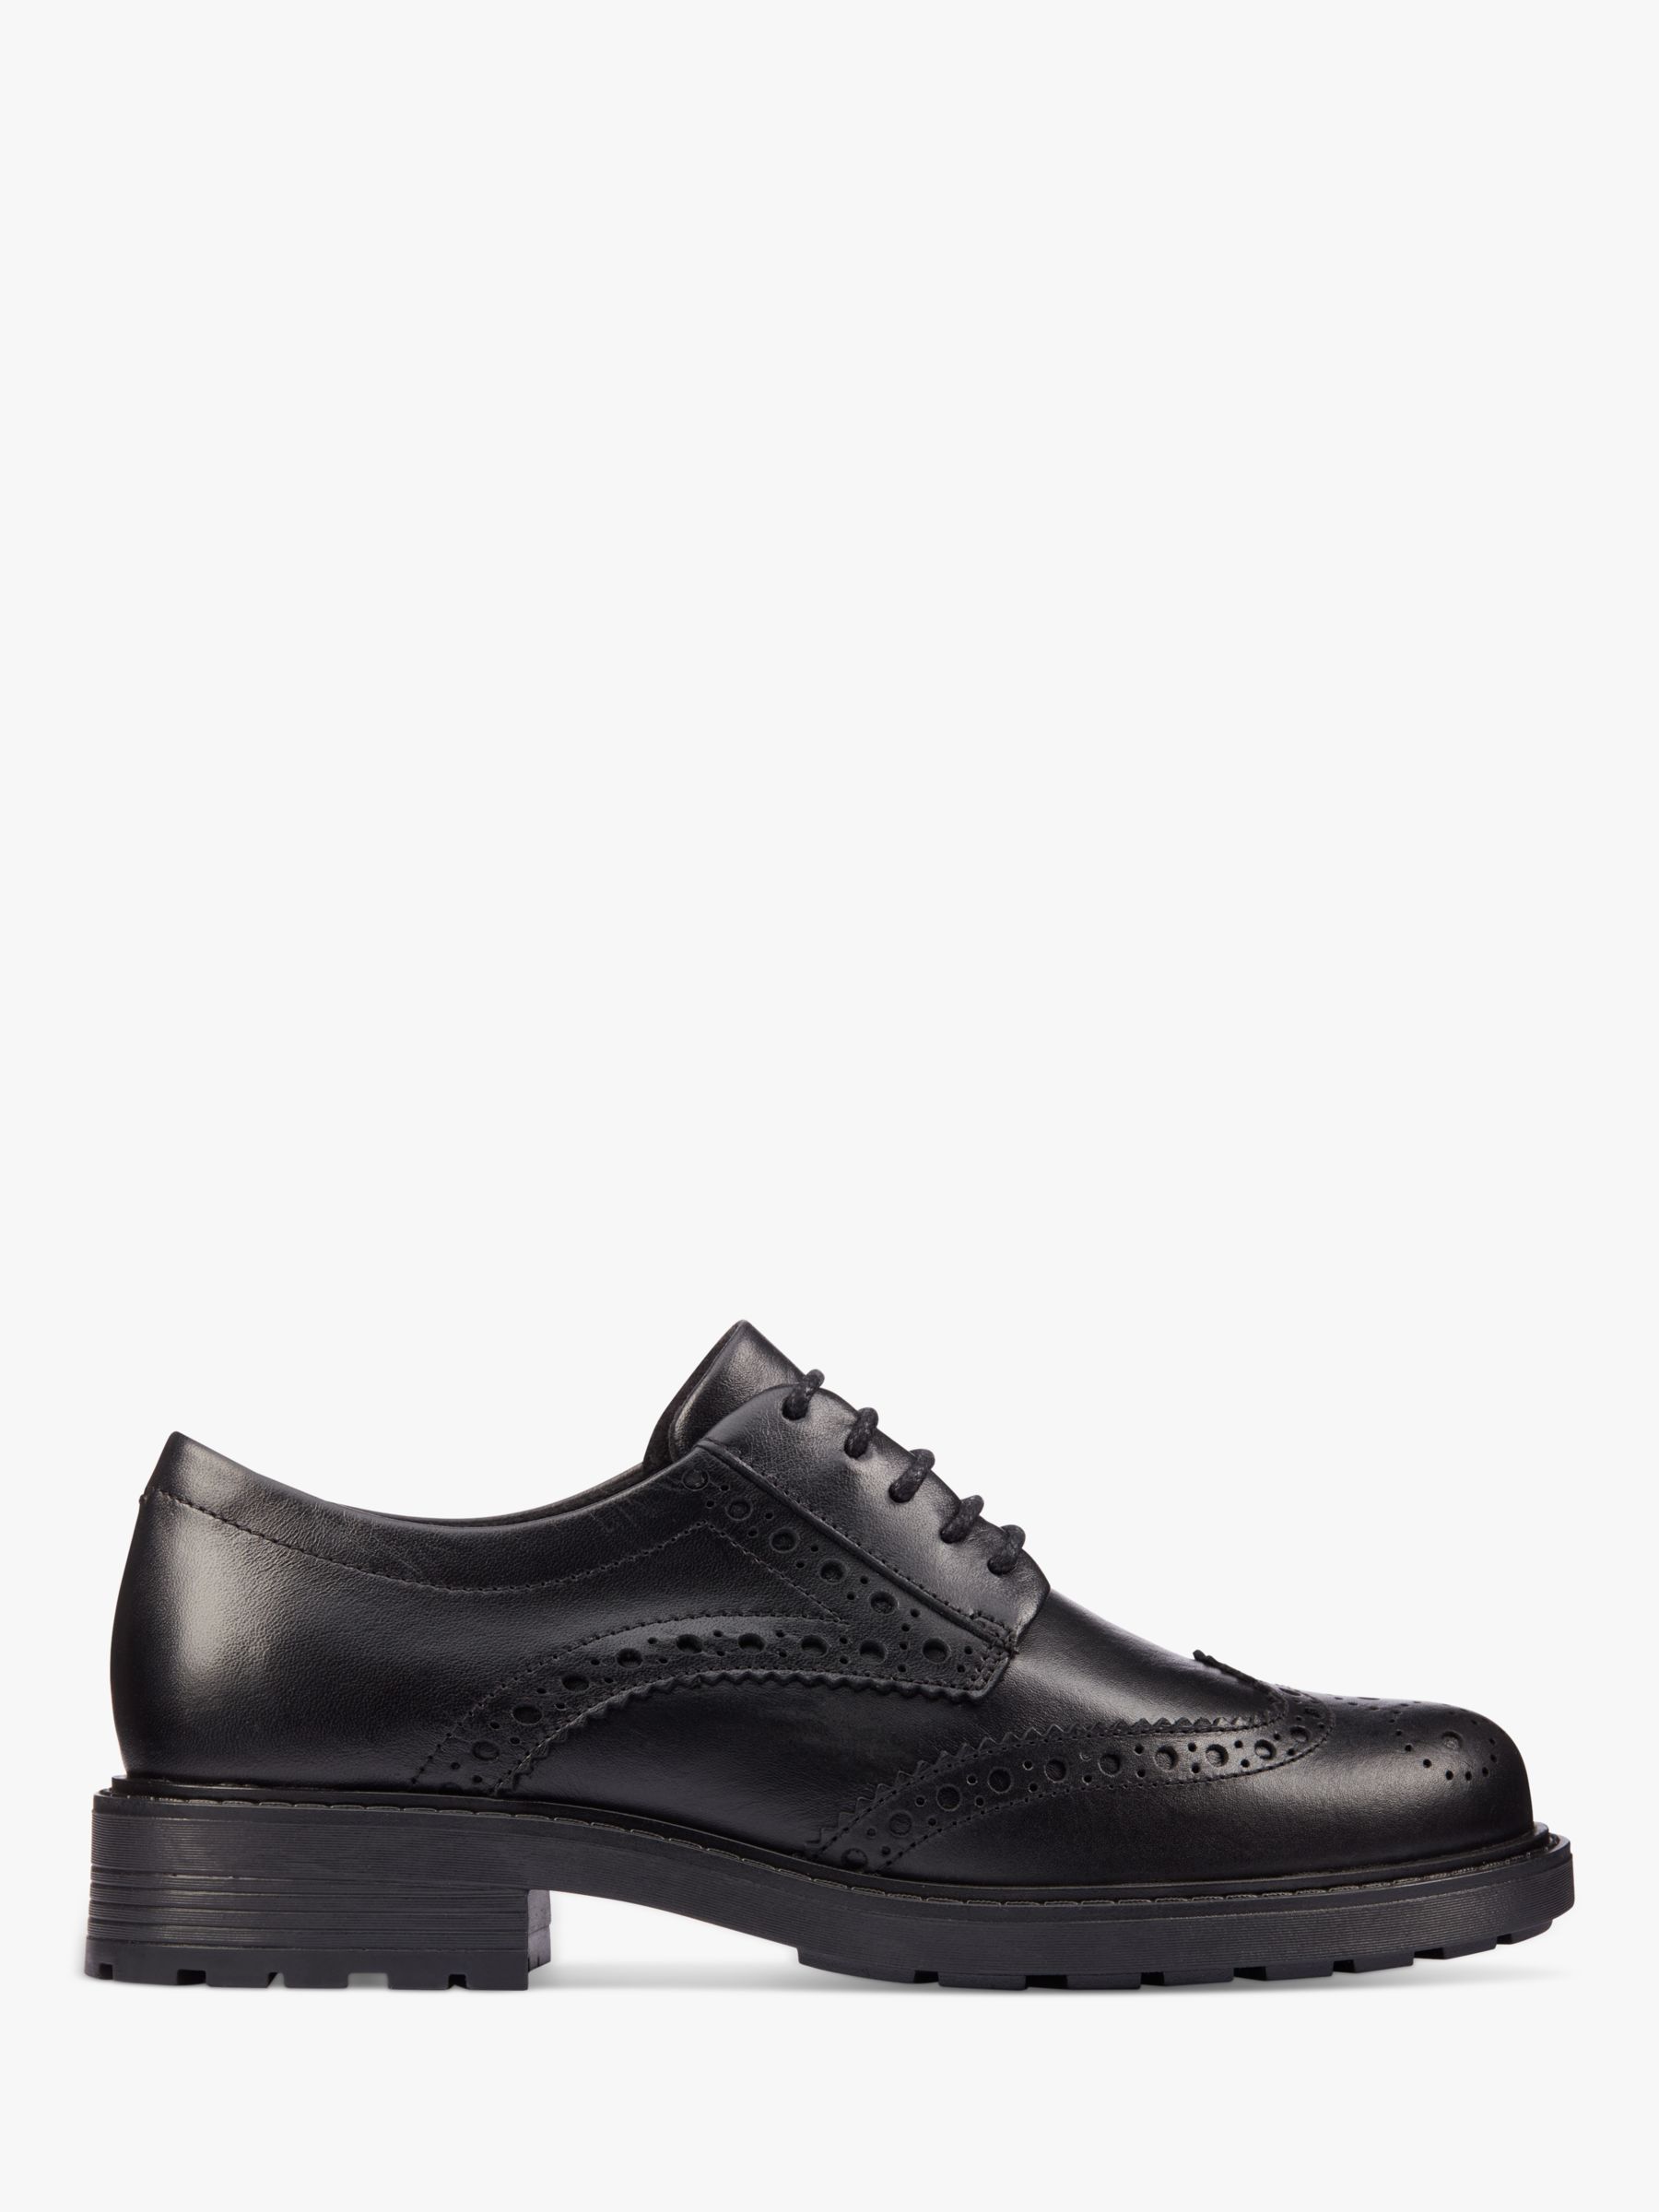 Inmundo navegador Soplar Clarks Orinoco 2 Limit Chunky Sole Leather Brogue Shoes, Black at John  Lewis & Partners